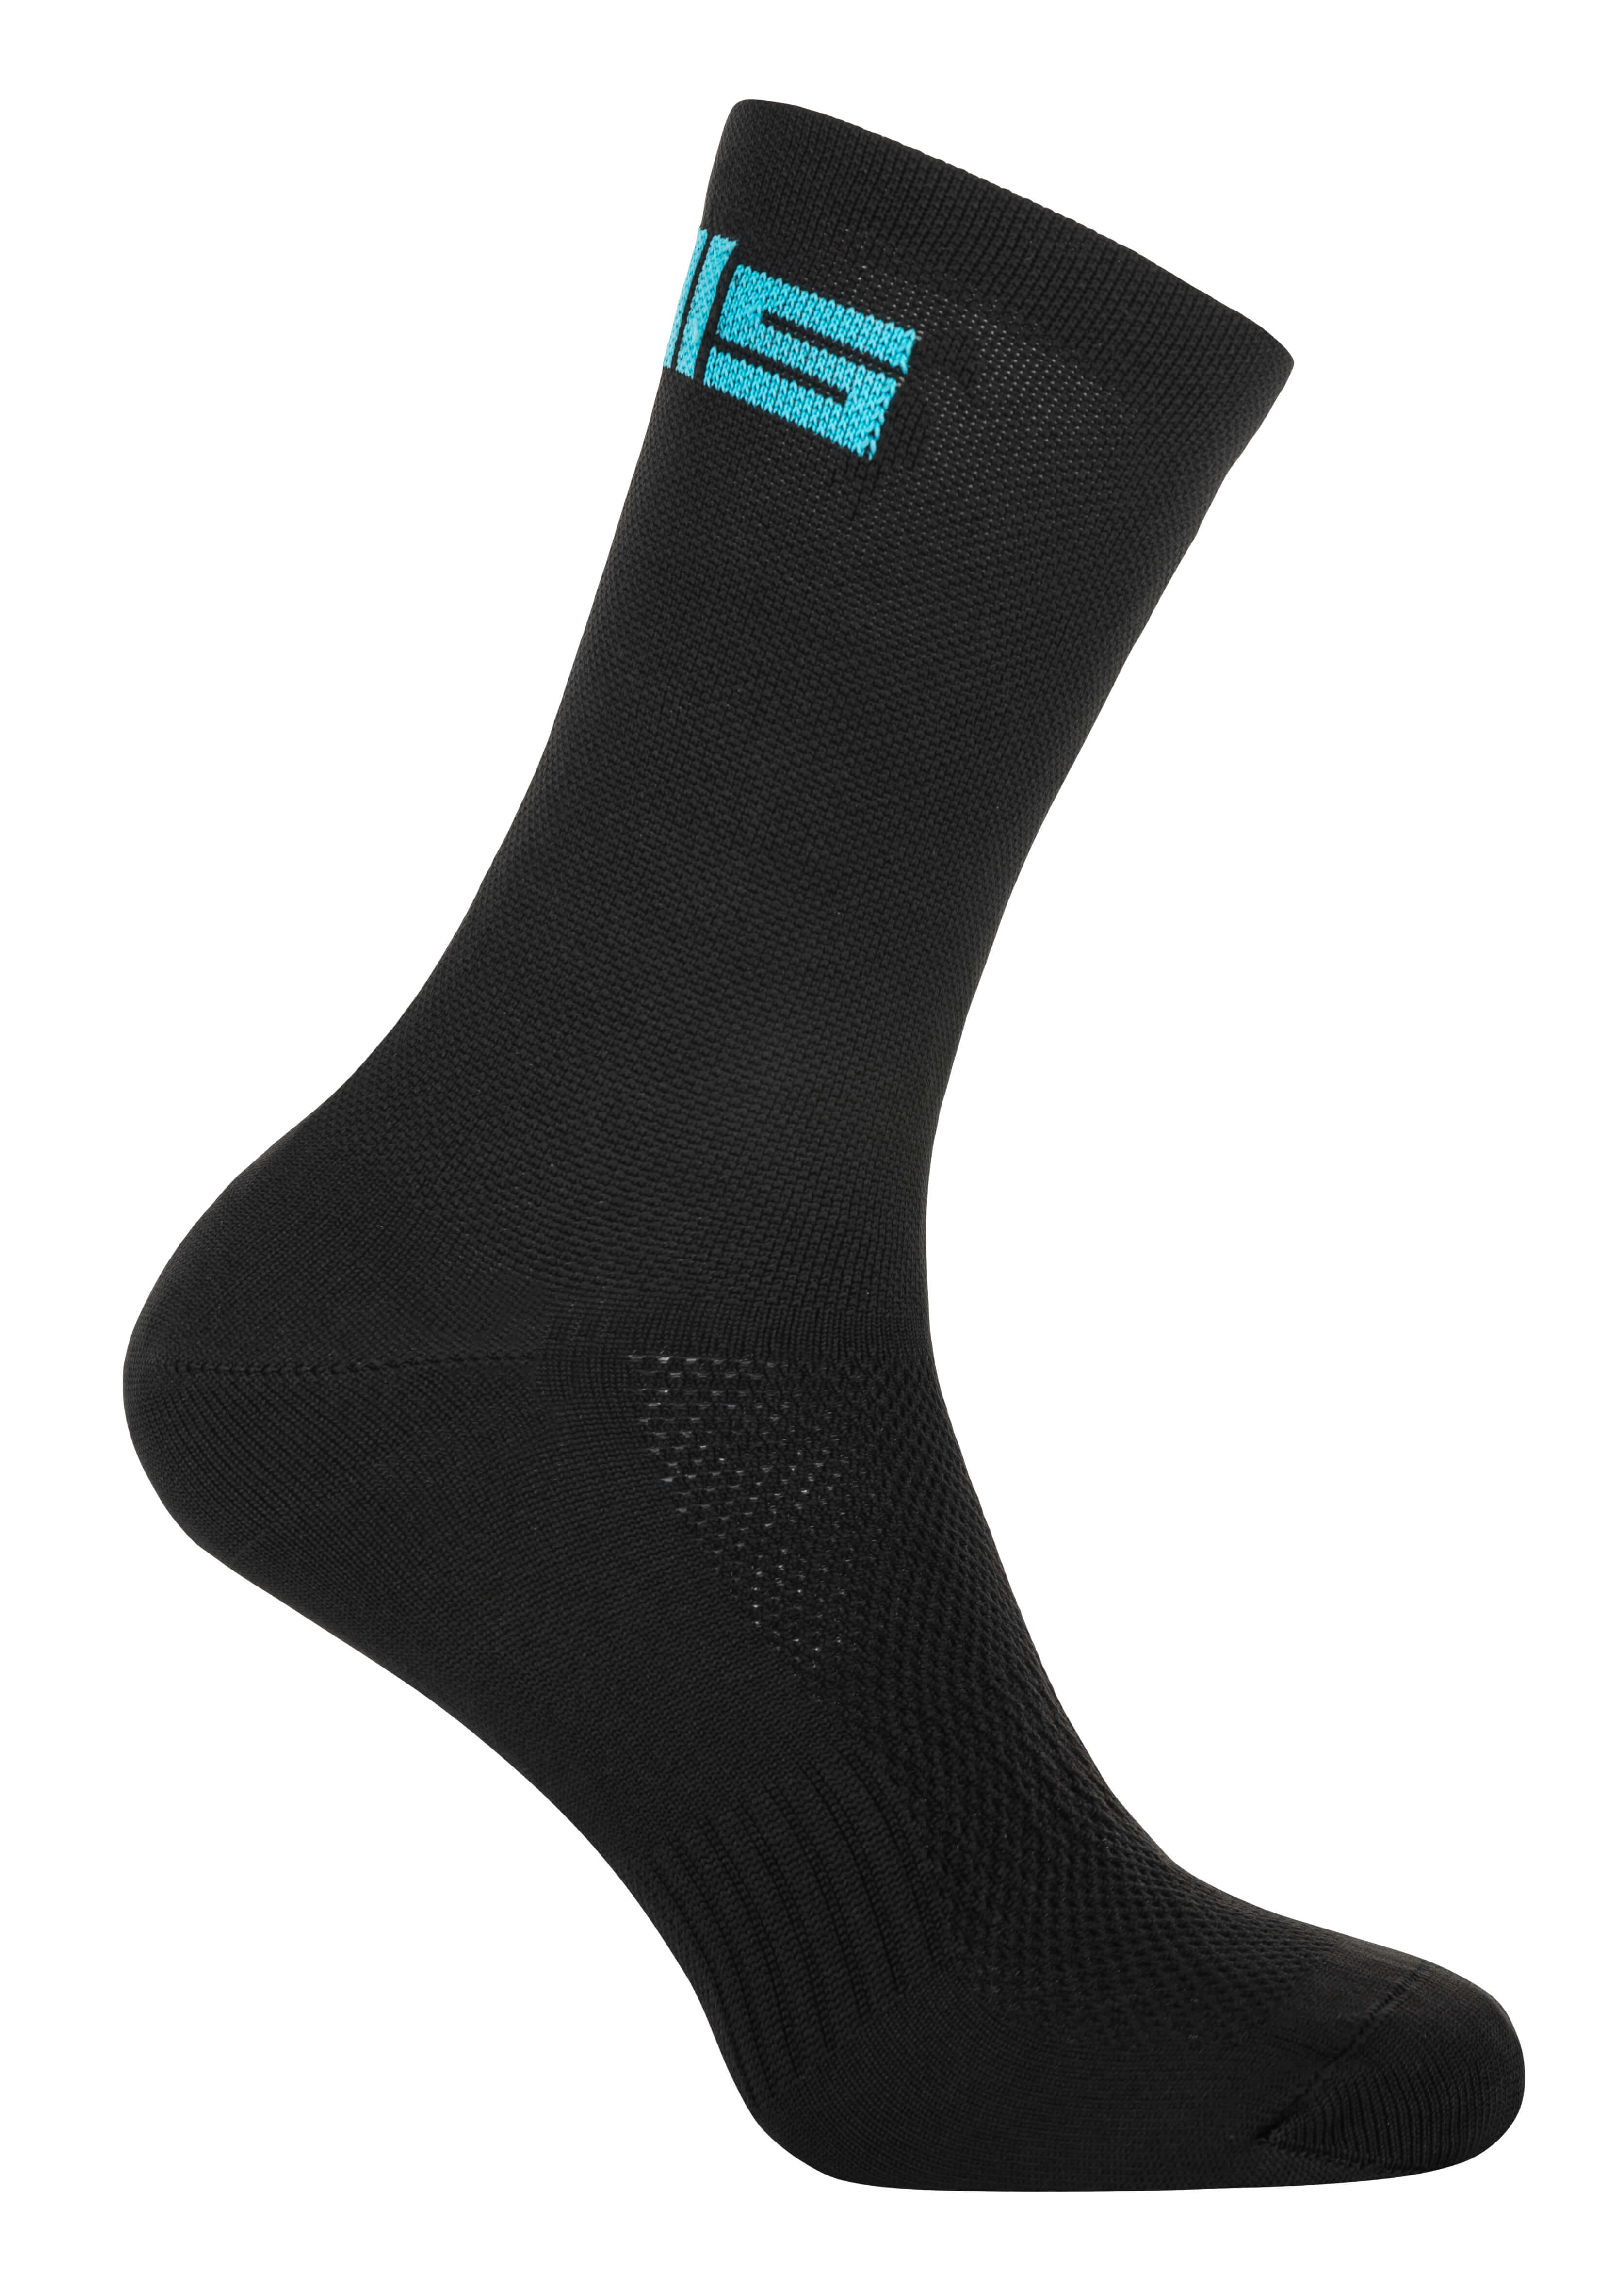 Ponožky PELLS Logos Black/Cyan - 35-38